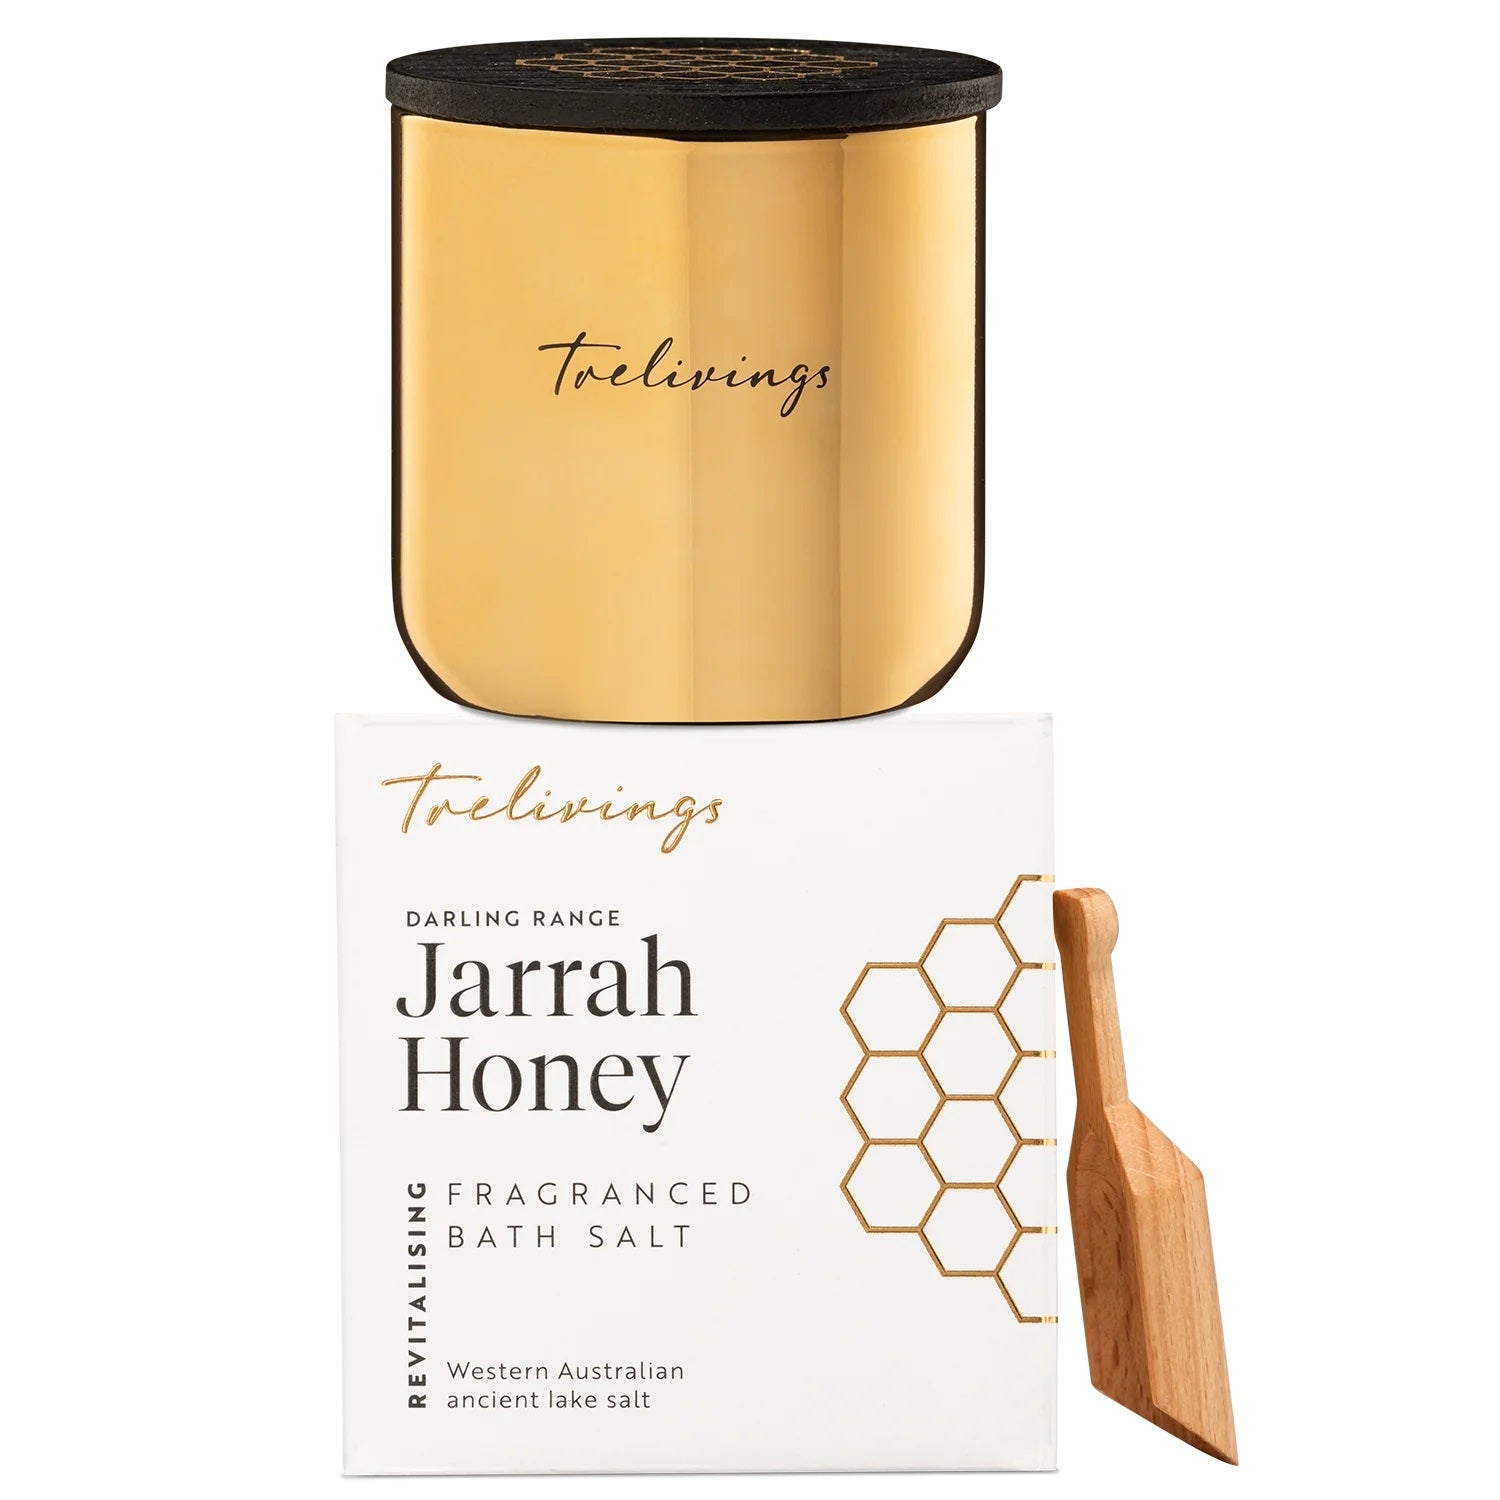 Trelivings Jarrah Honey Fragranced Bath Salt 300g Jar